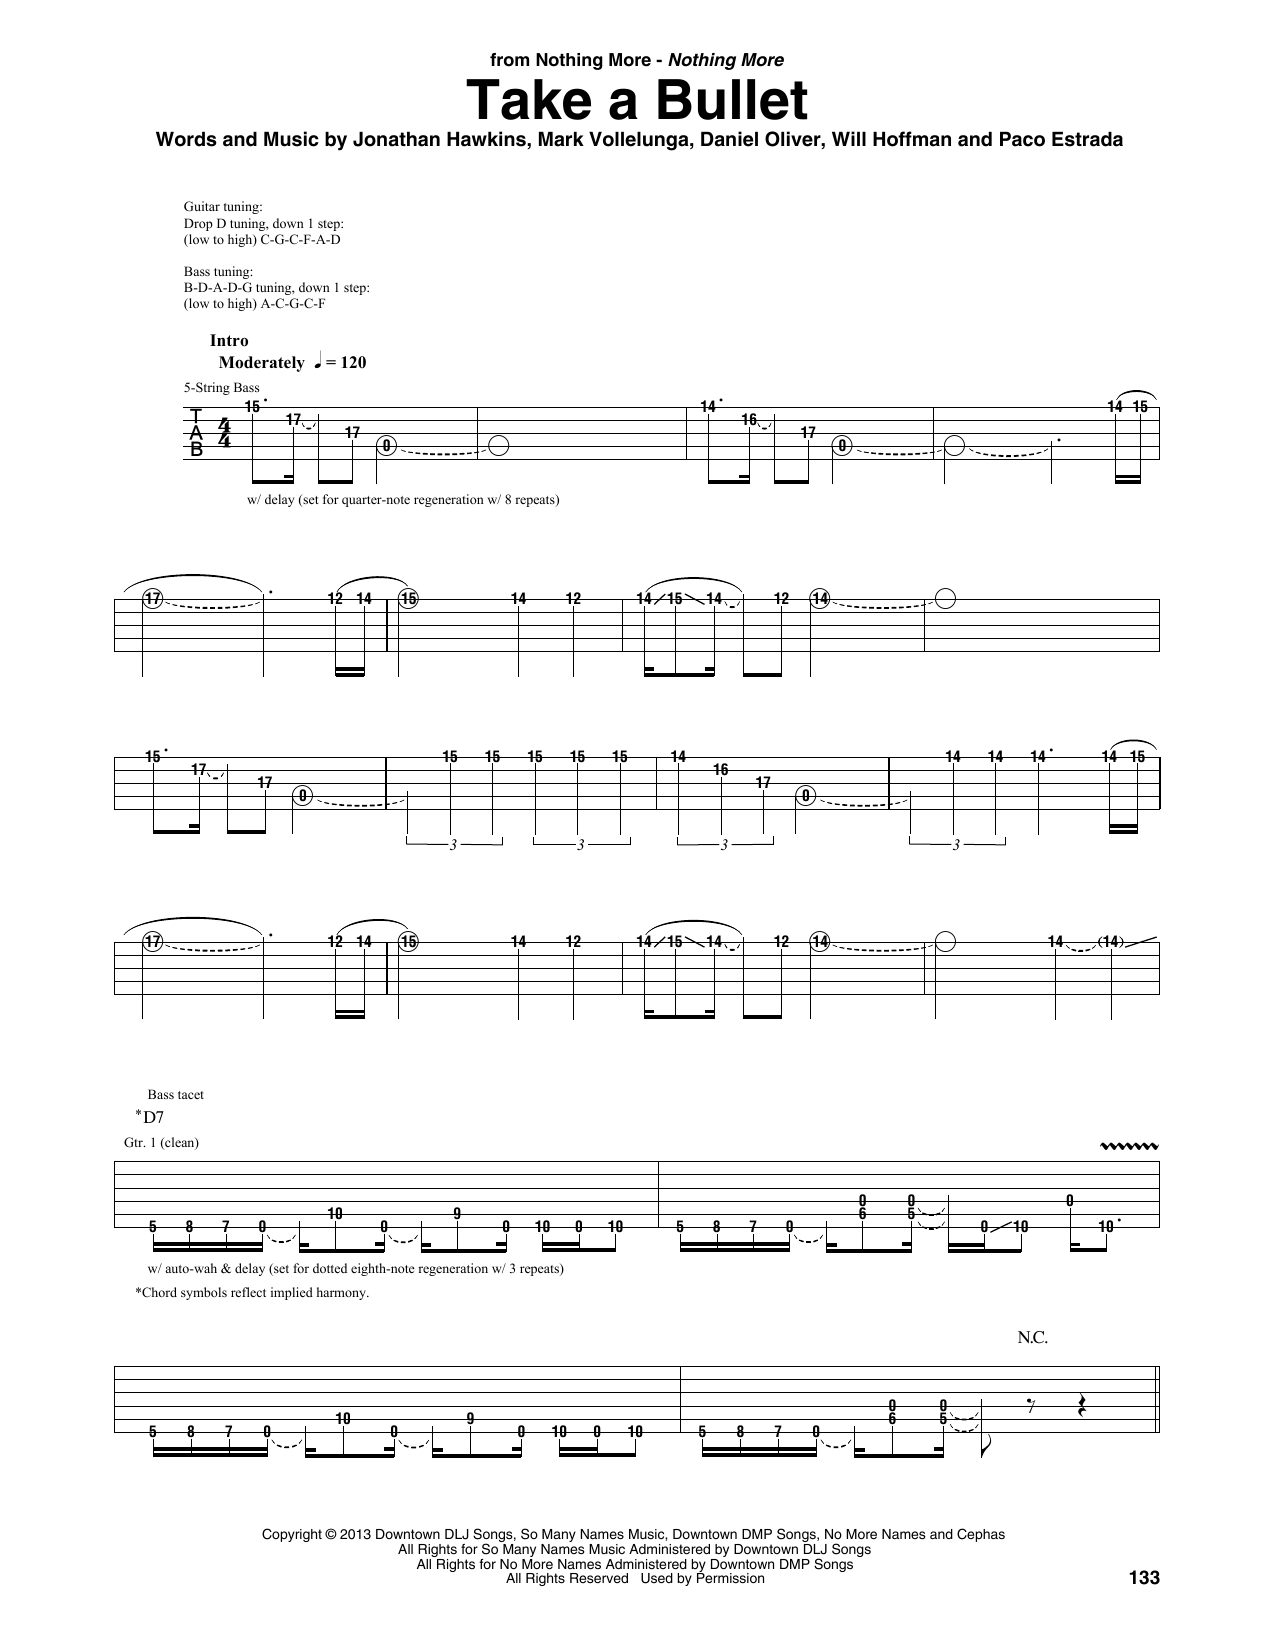 Nothing More Take A Bullet Sheet Music Notes & Chords for Guitar Rhythm Tab - Download or Print PDF